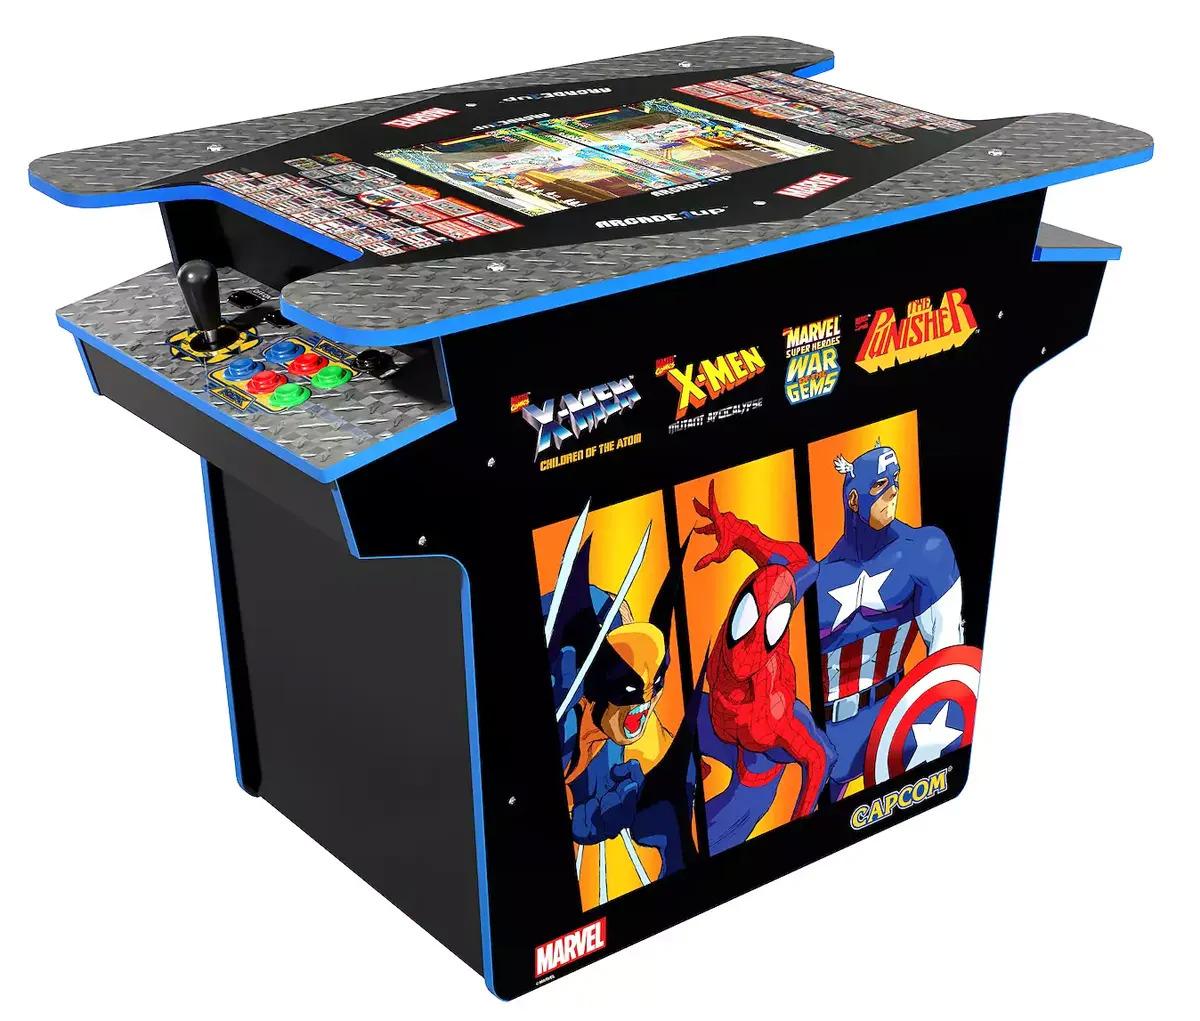 Arcade1up Marvel vs Capcom Head-to-Head Arcade Table with $80 Kohls Cash for $399.99